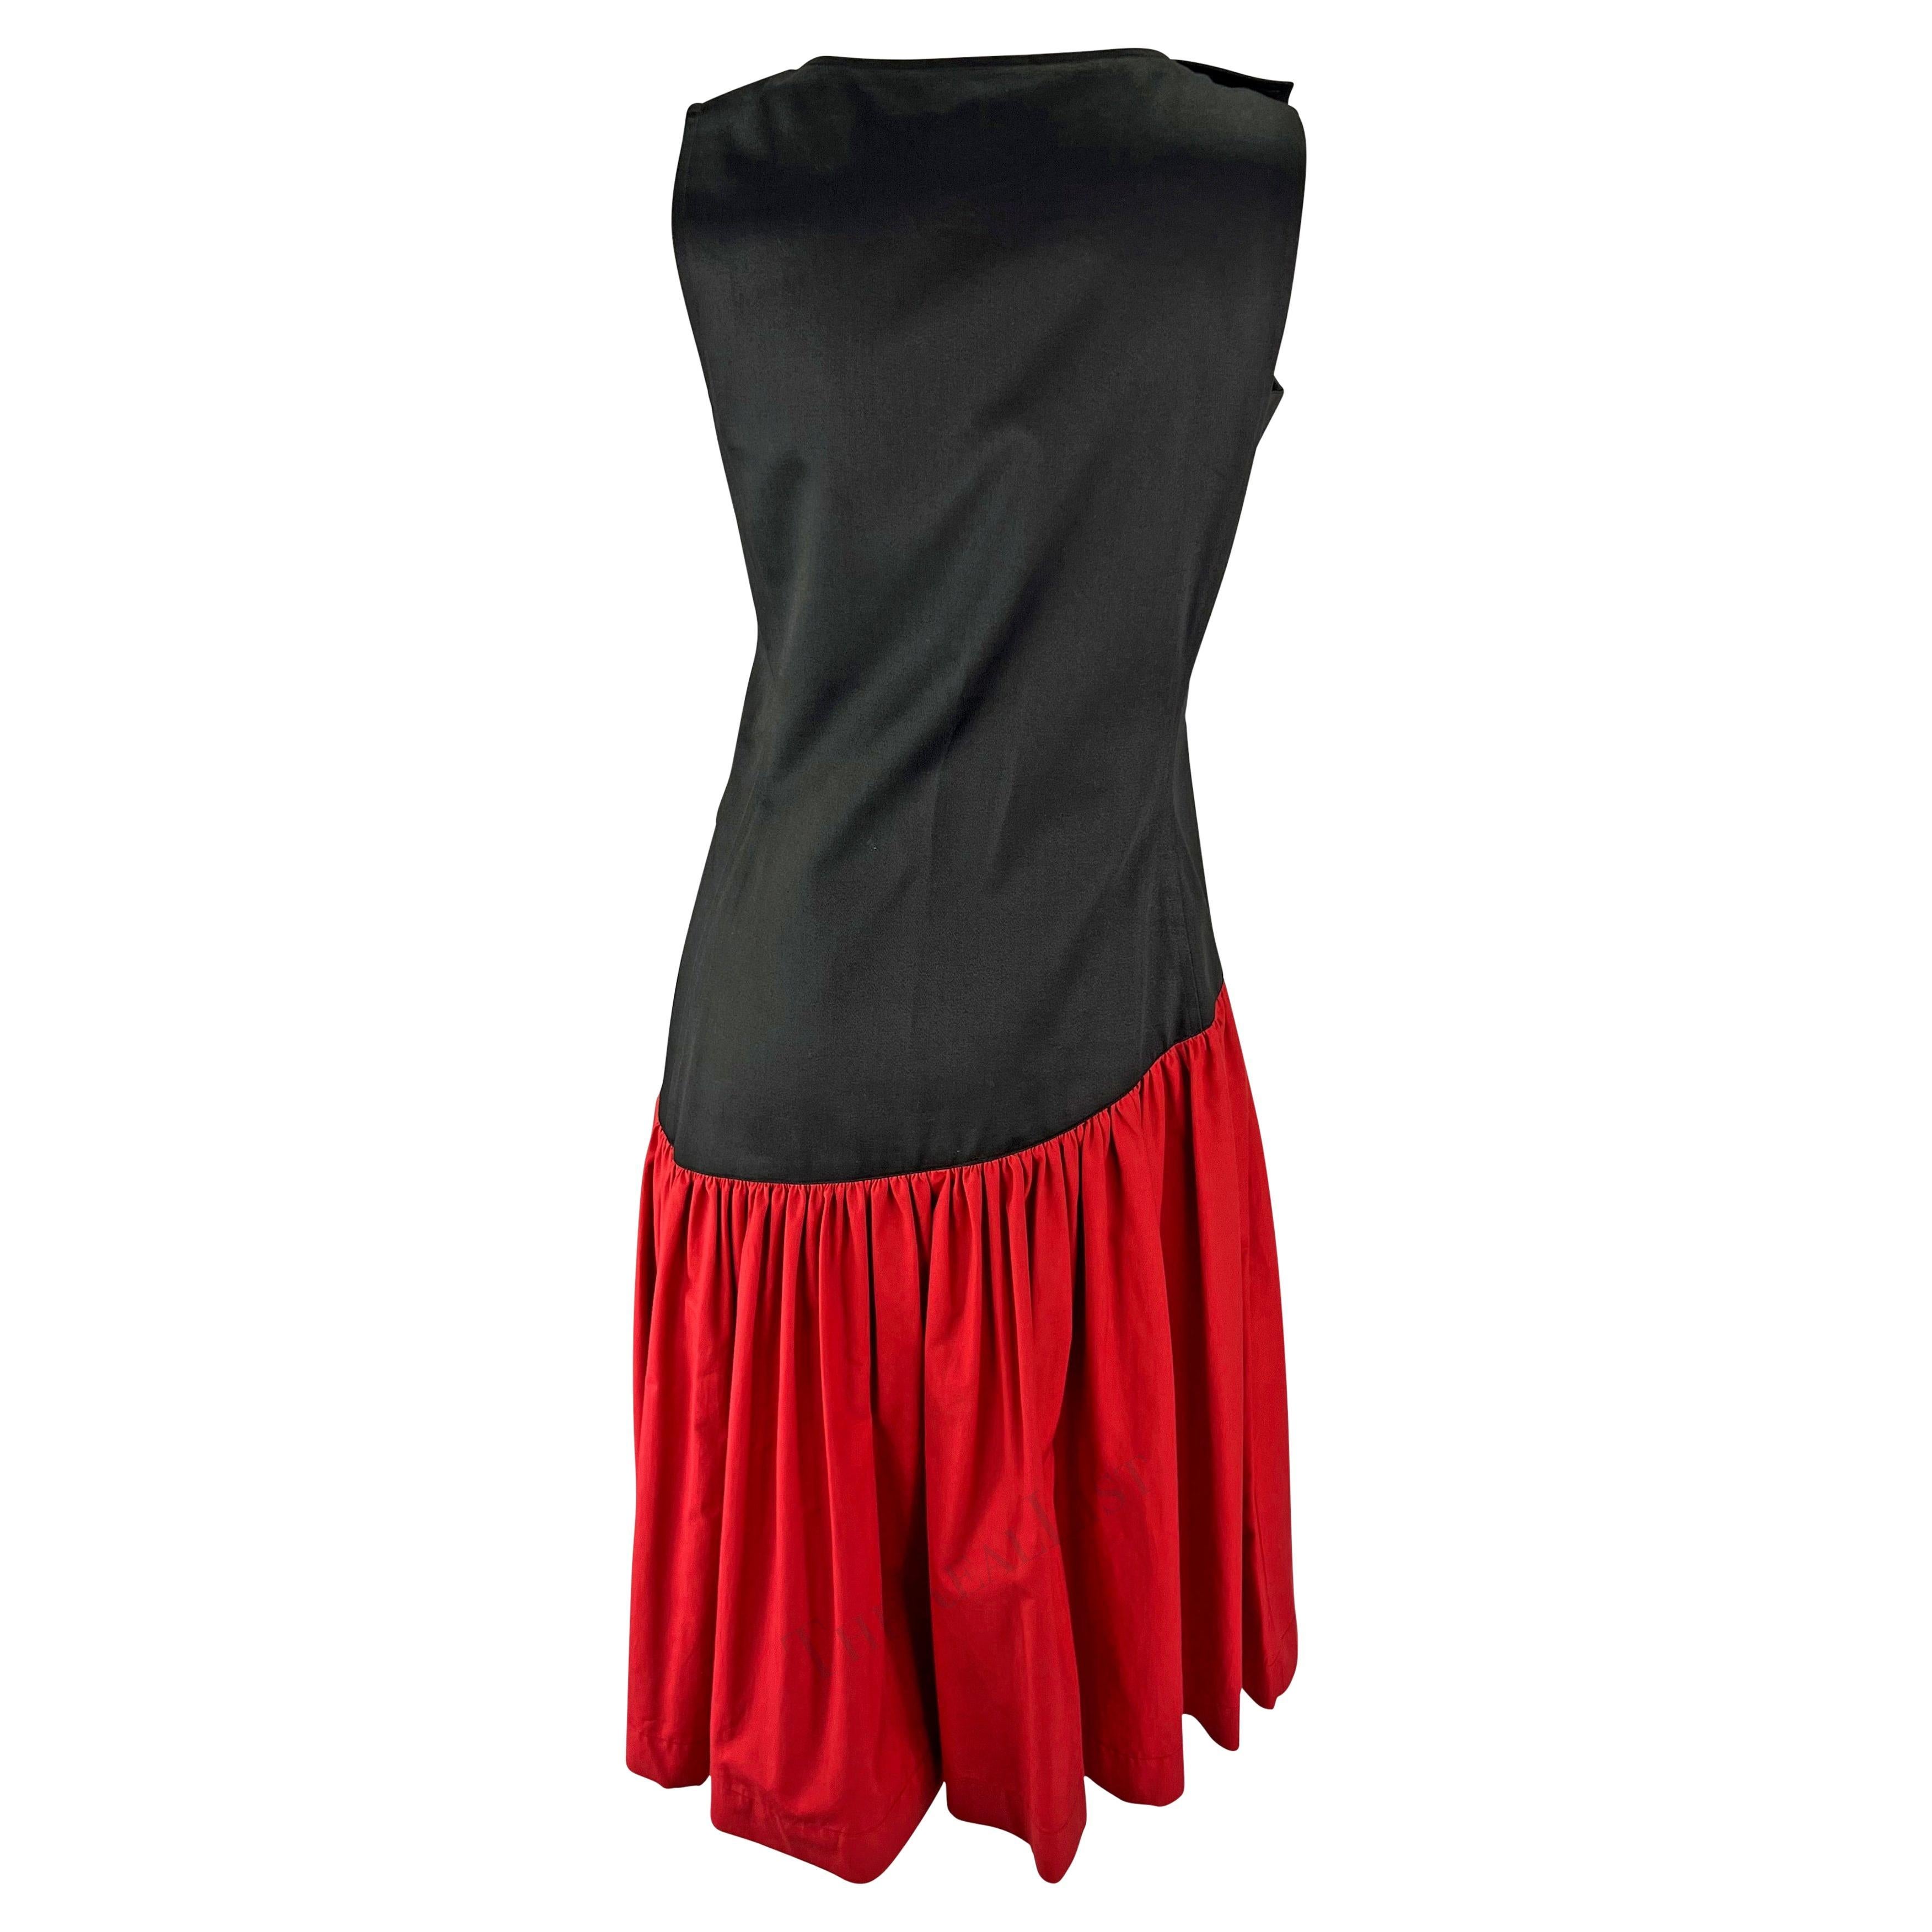 S/S 1983 Saint Laurent Rive Gauche Runway Ad Black Red Sleeveless Dress For Sale 3